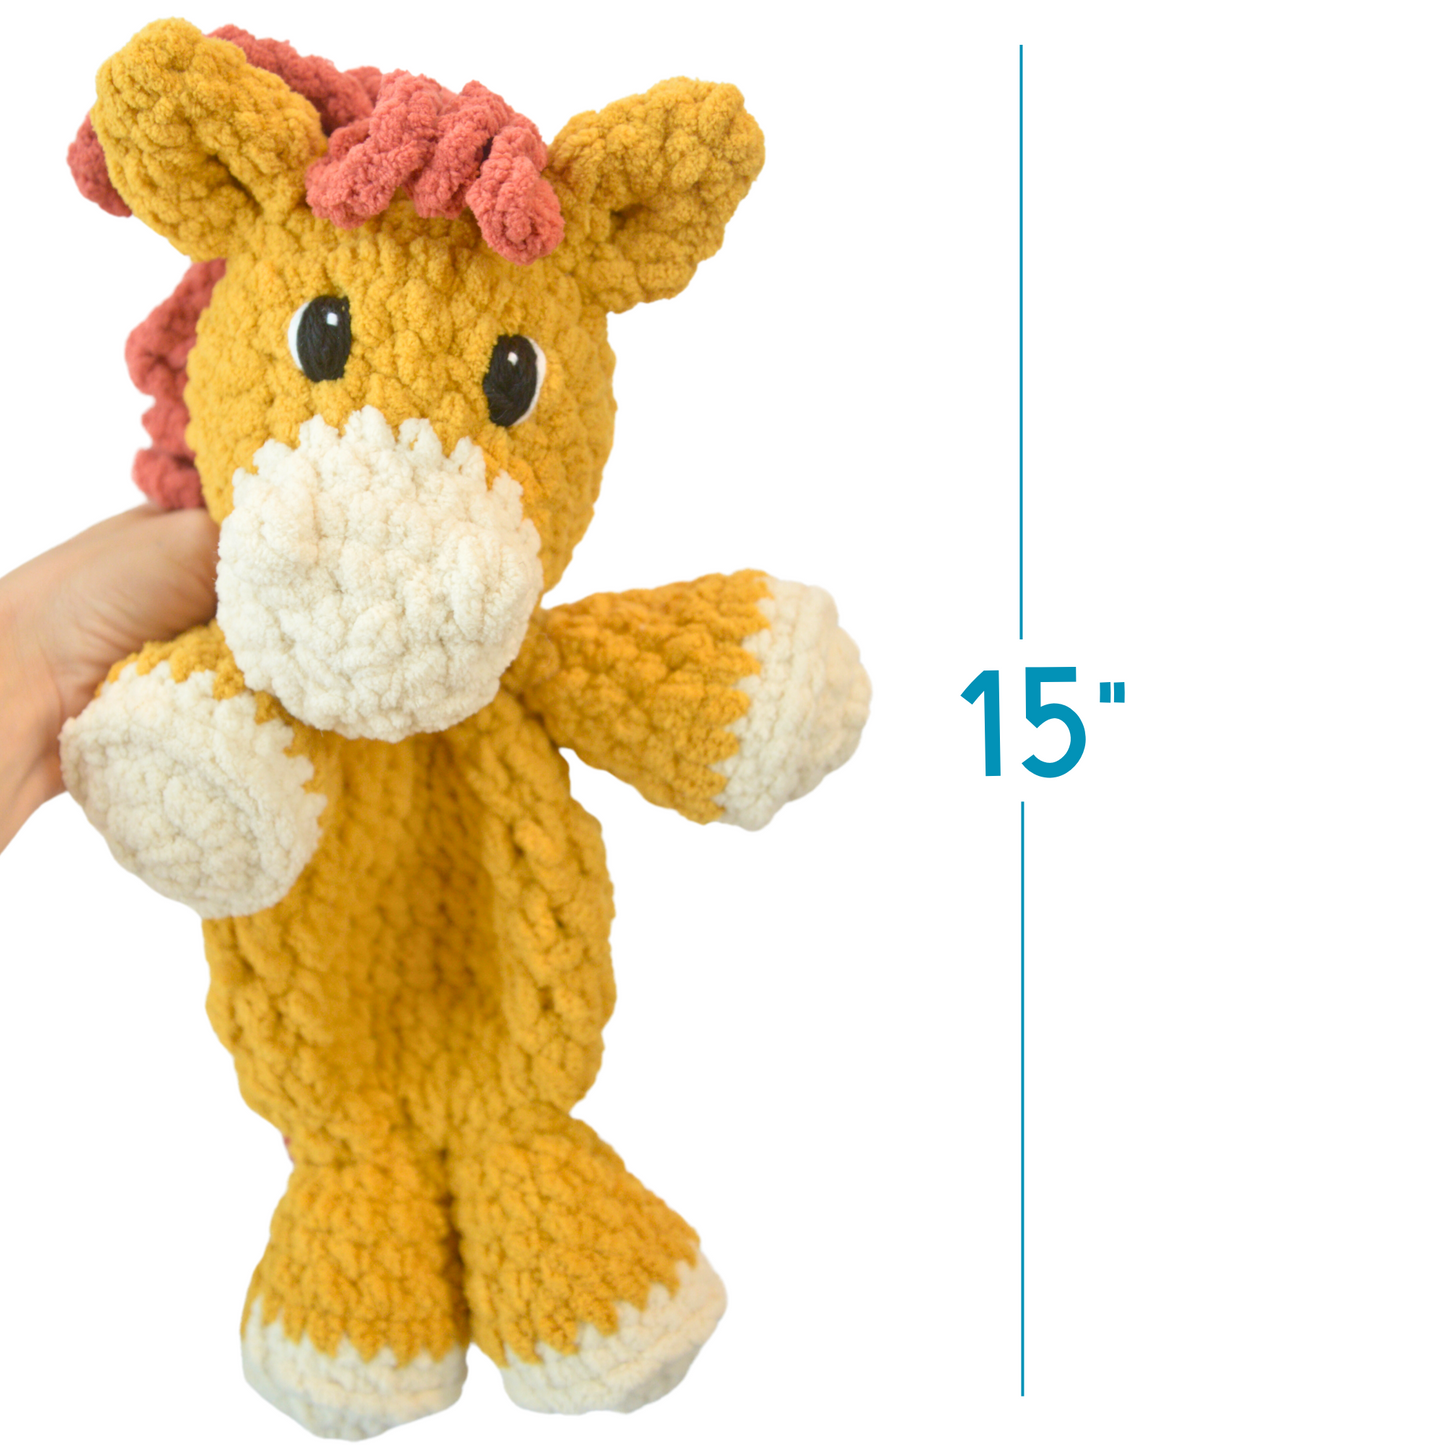 Crochet Horse Pattern Snuggler PDF Download